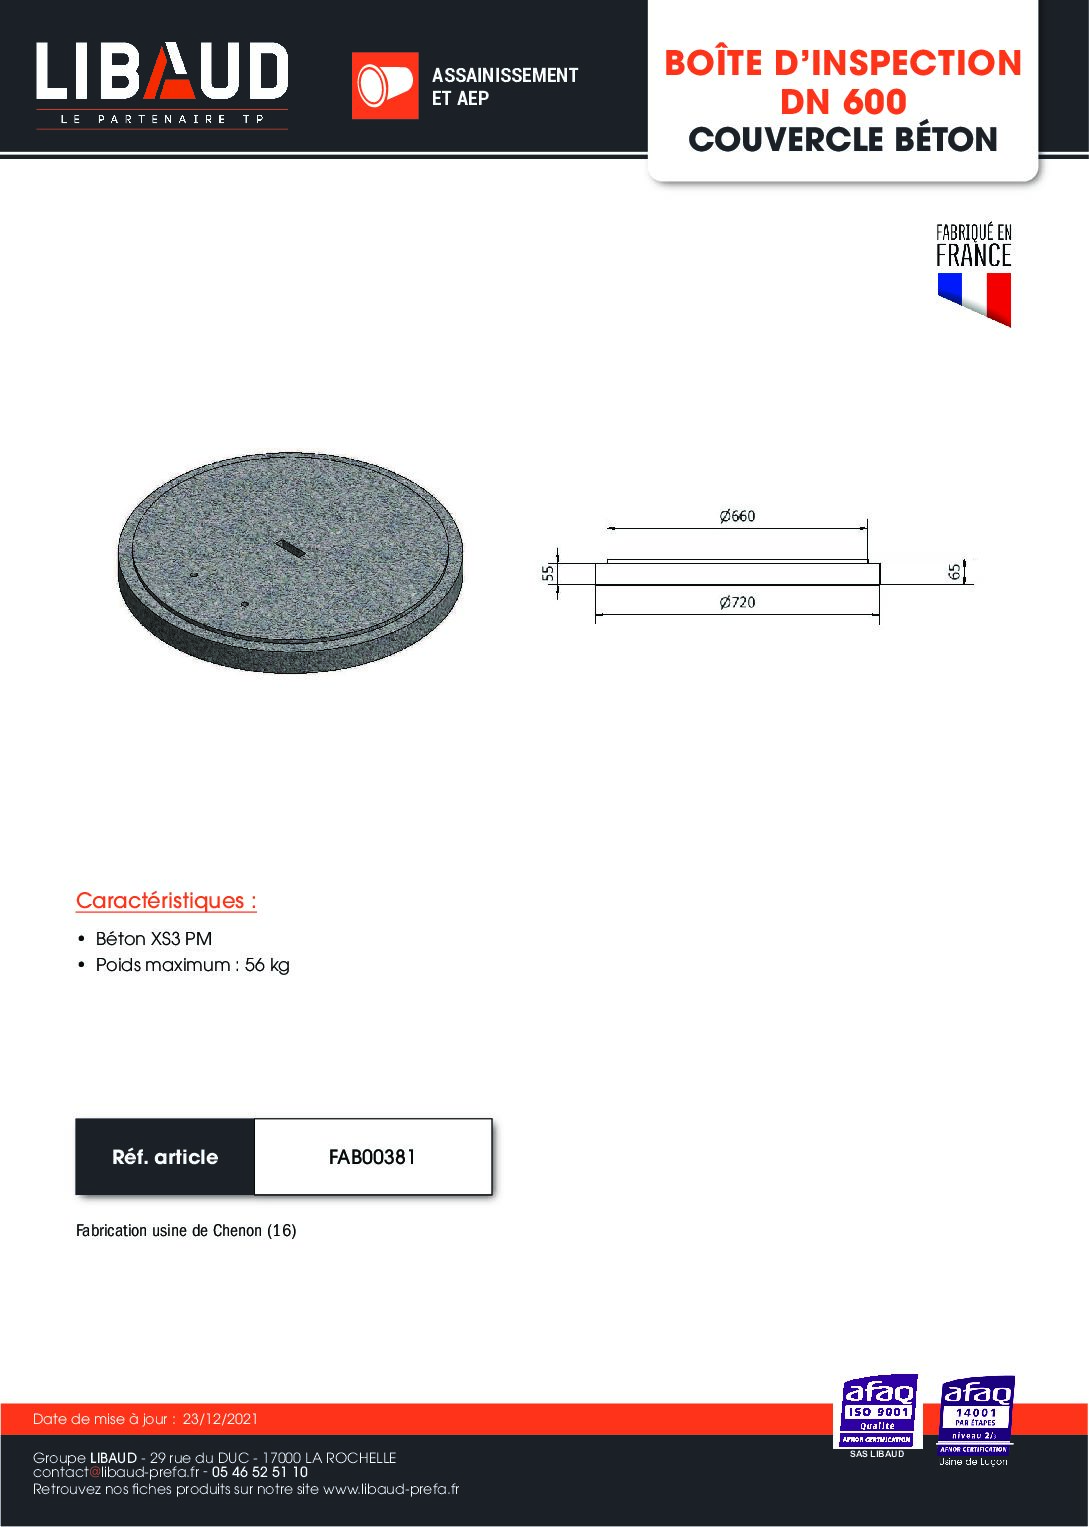 ft_libaud_boite-inspection_dn_600_couvercle_beton